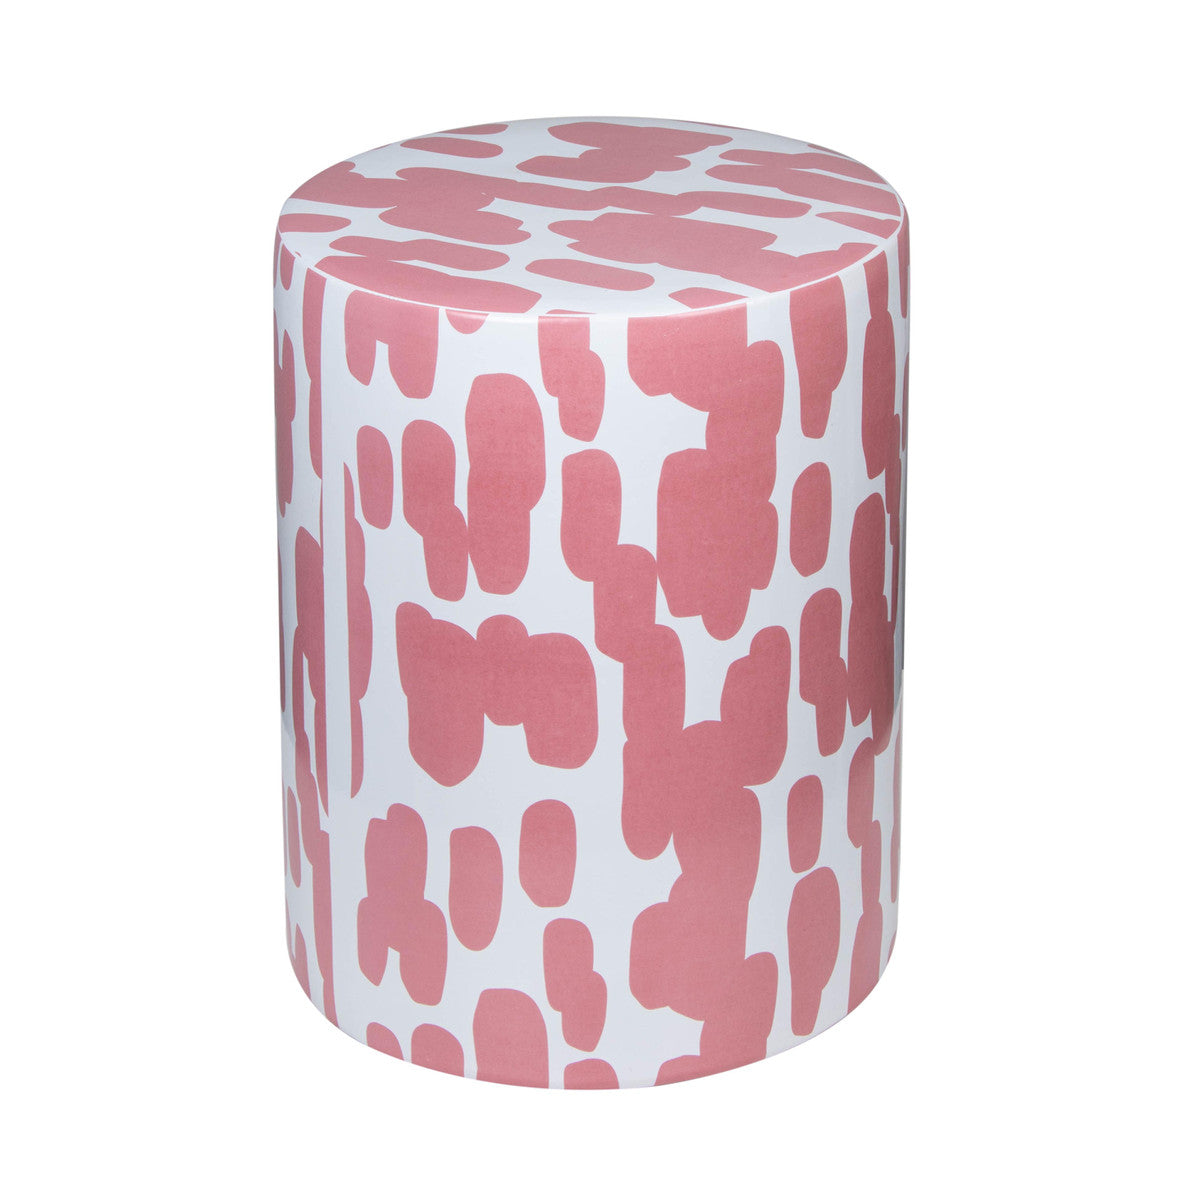 Taurus Ceramic Stool in Pink Strokes Print